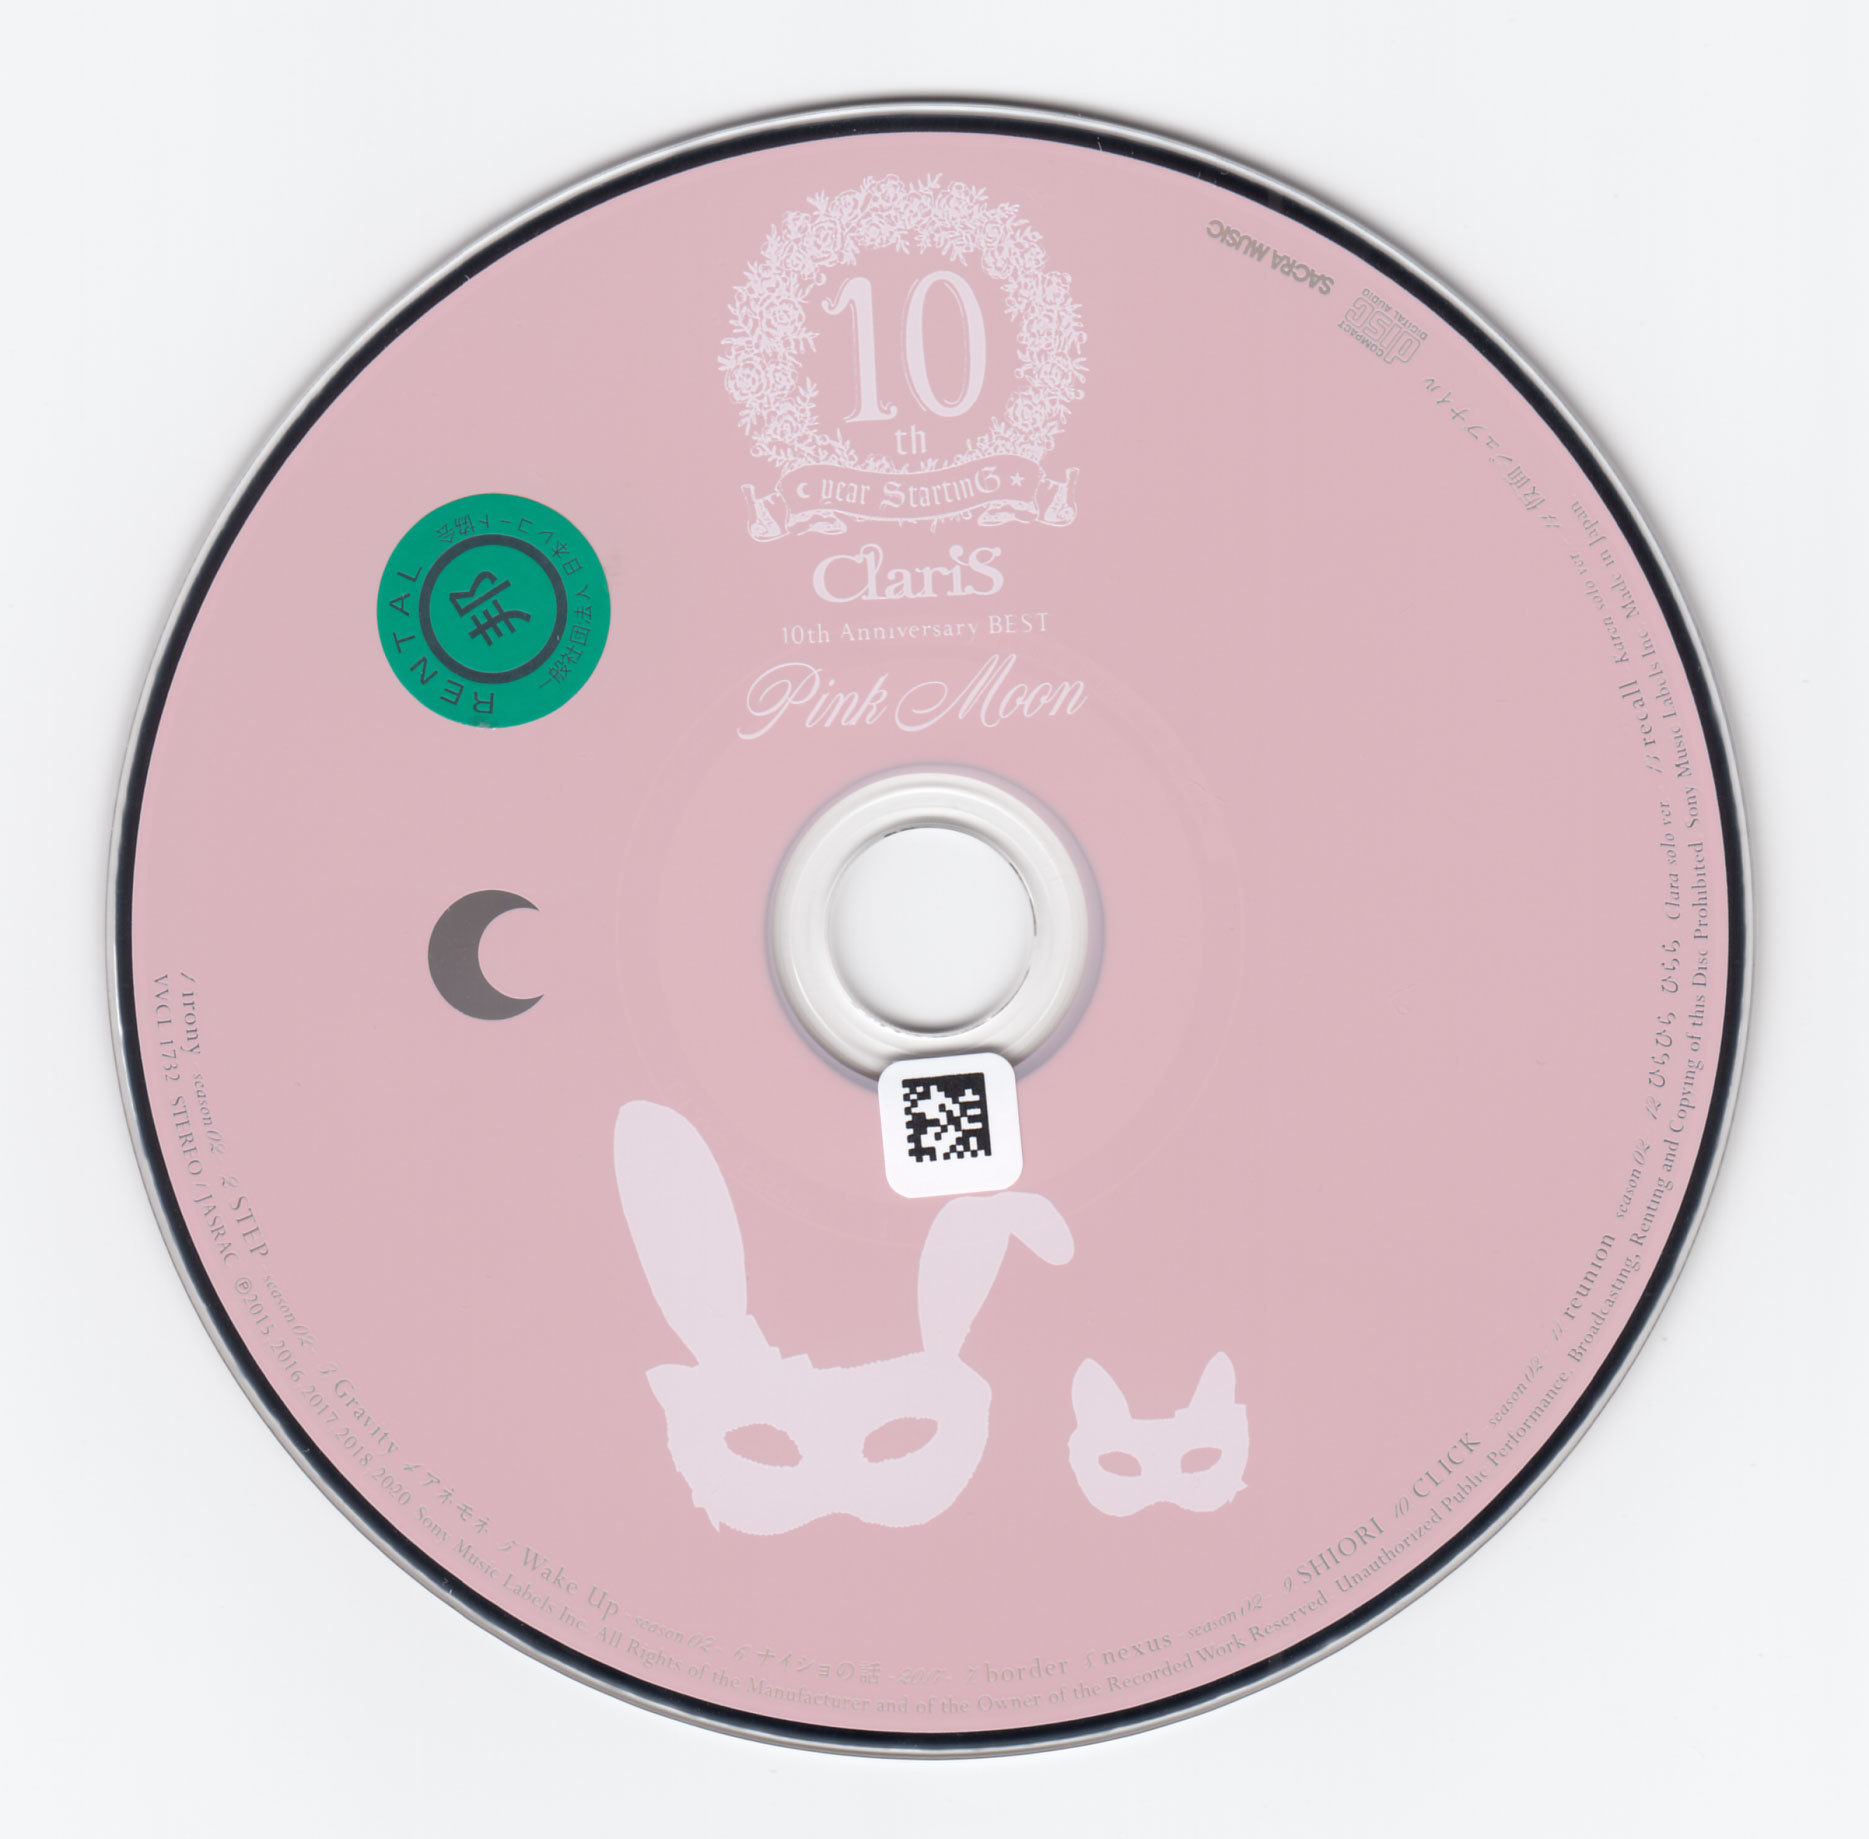 Anniversary best 10th claris